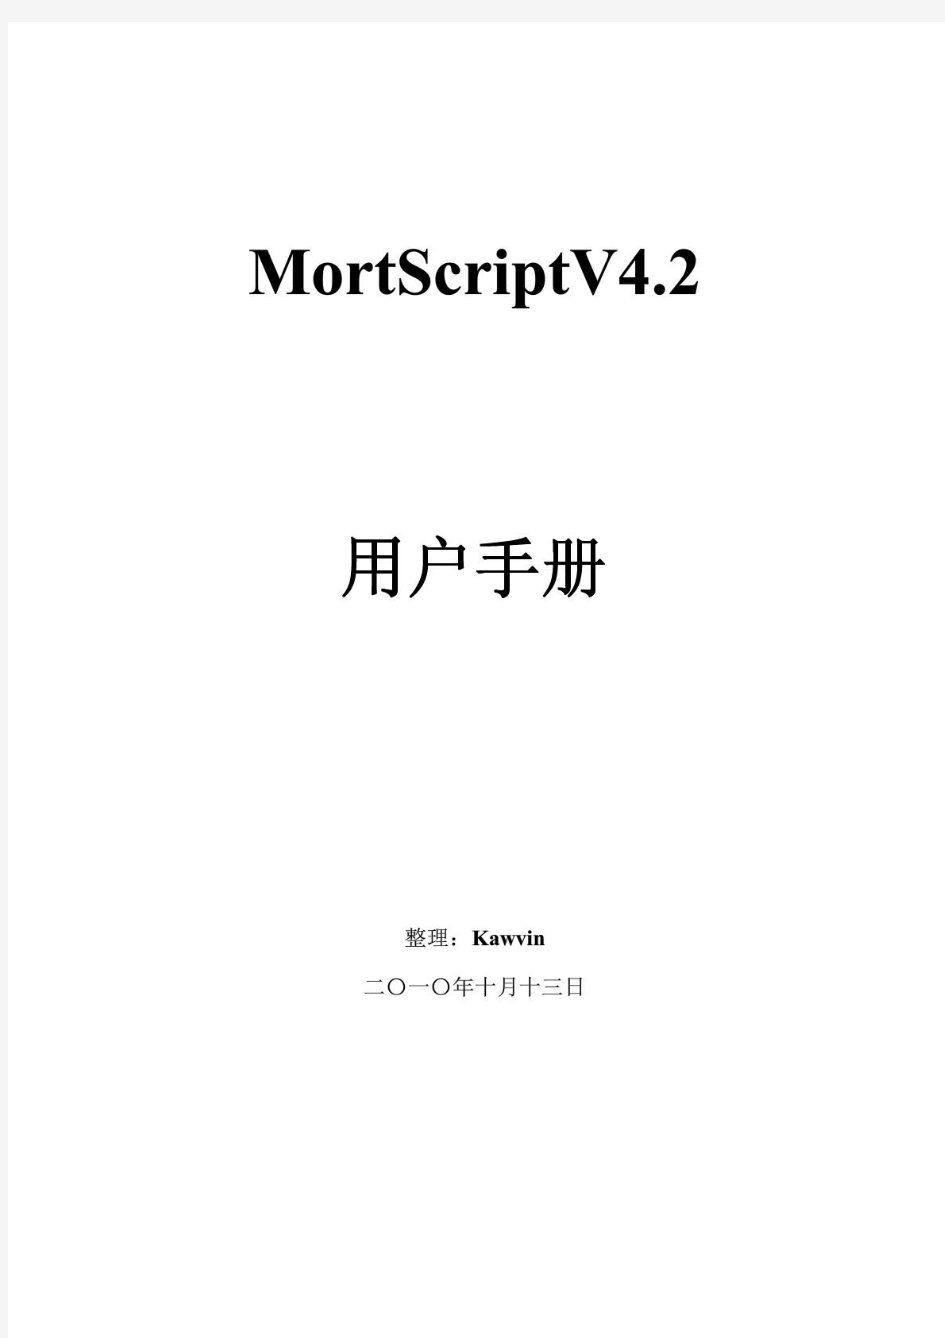 MortScriptV4.2用户手册(中文版)